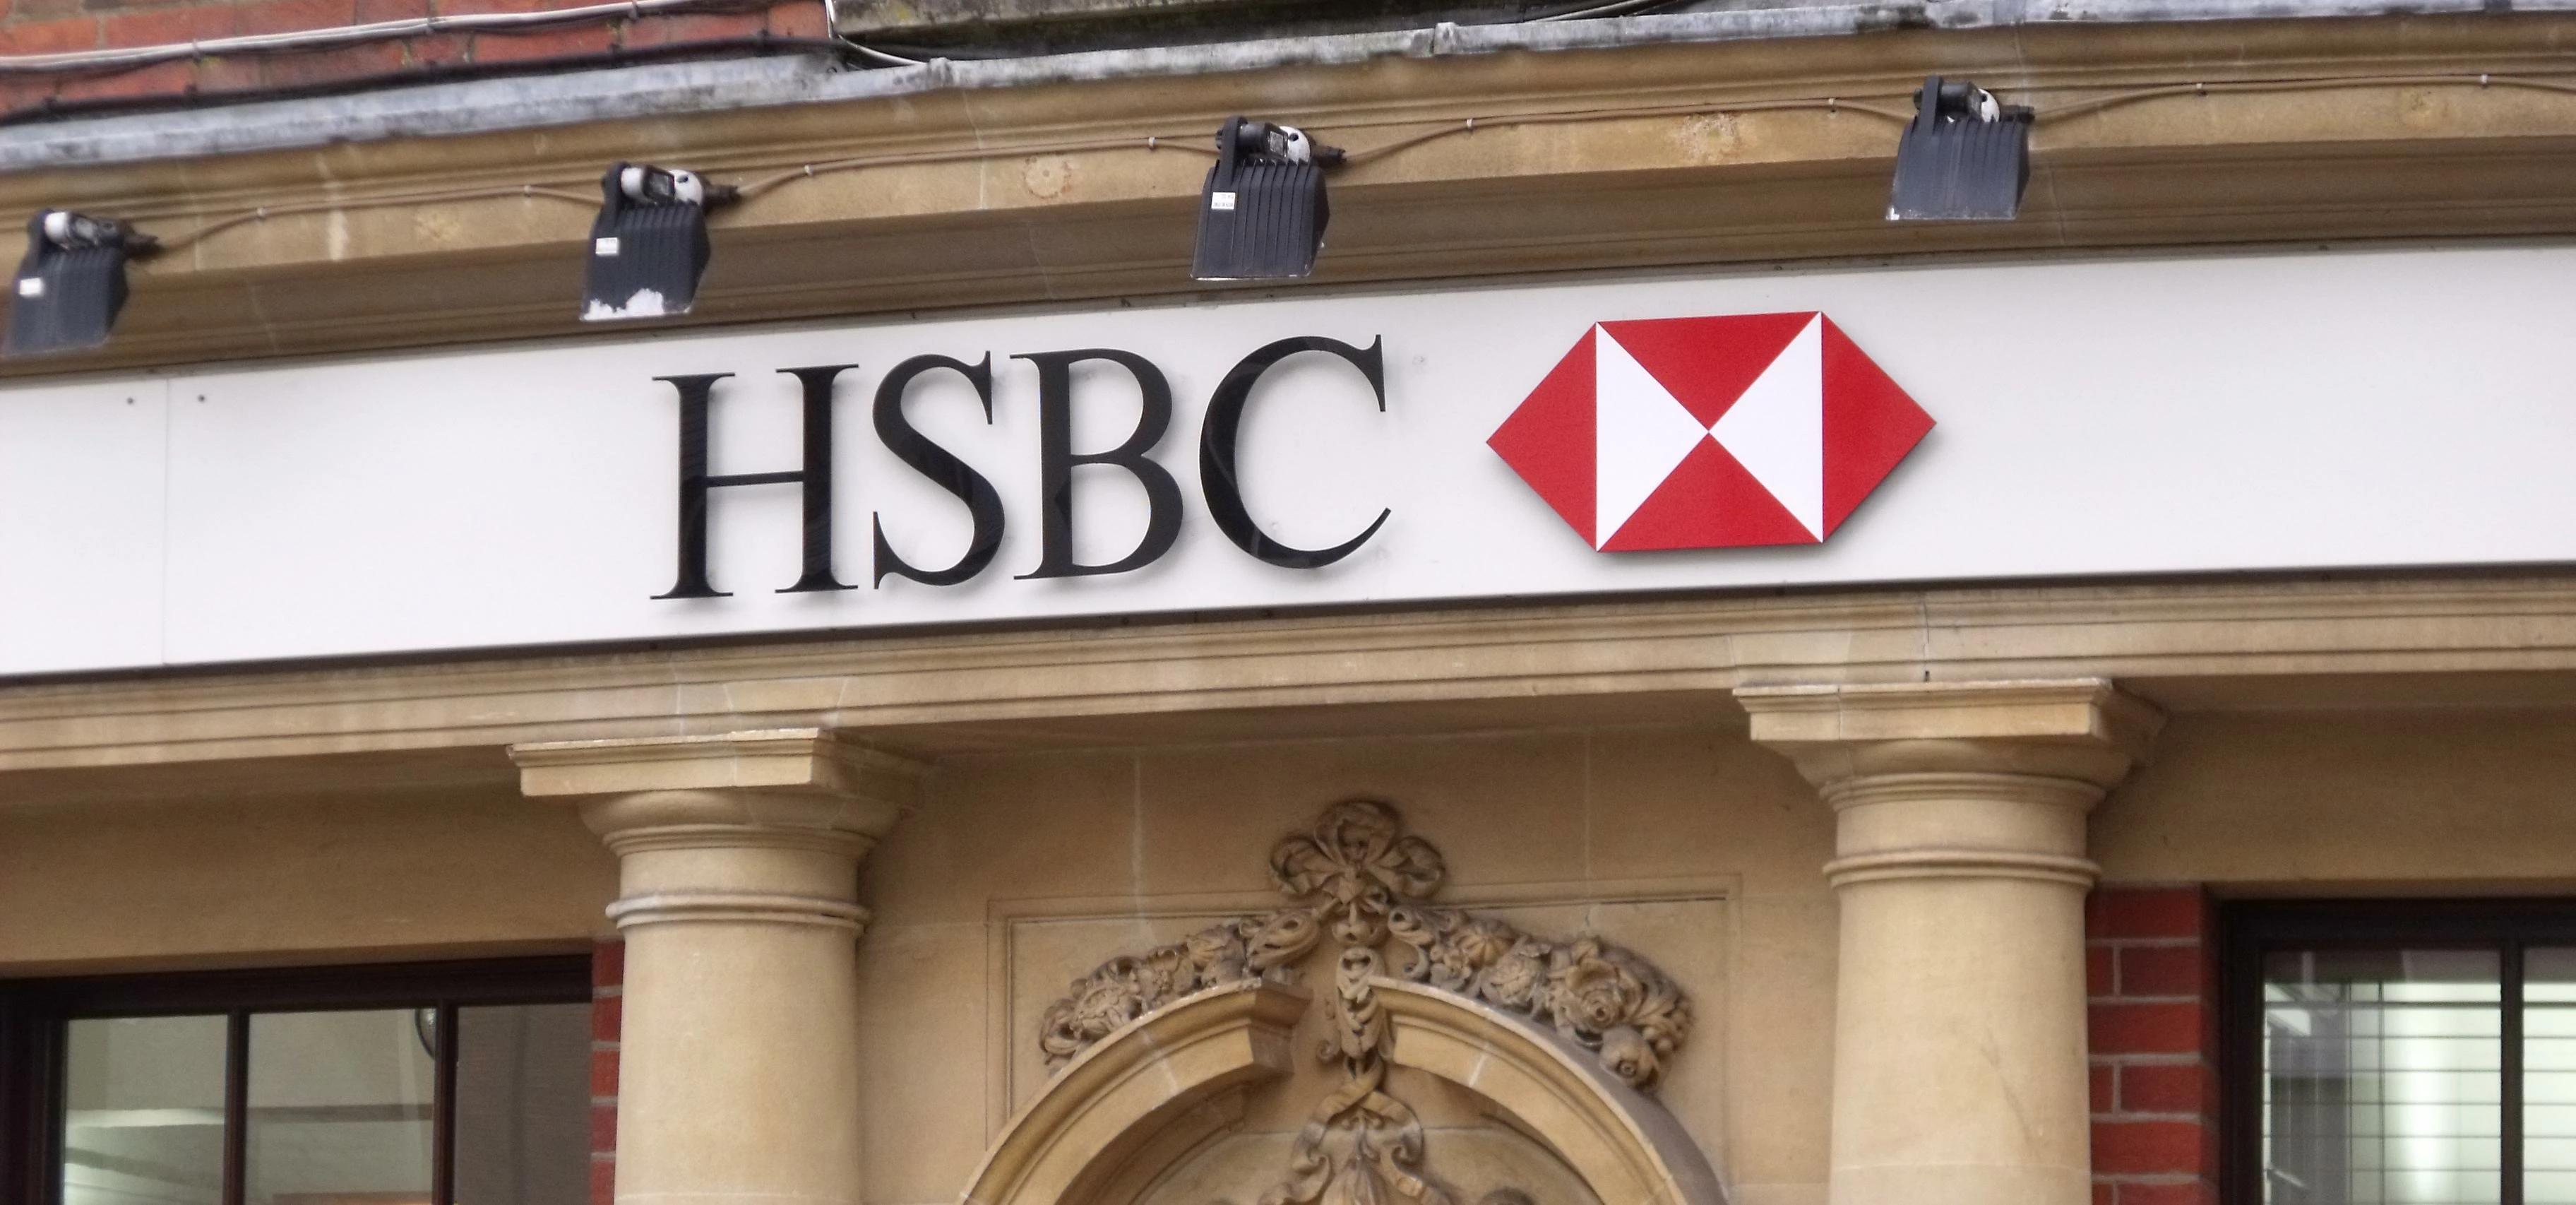 HSBC - High Street, Shaftesbury - sign